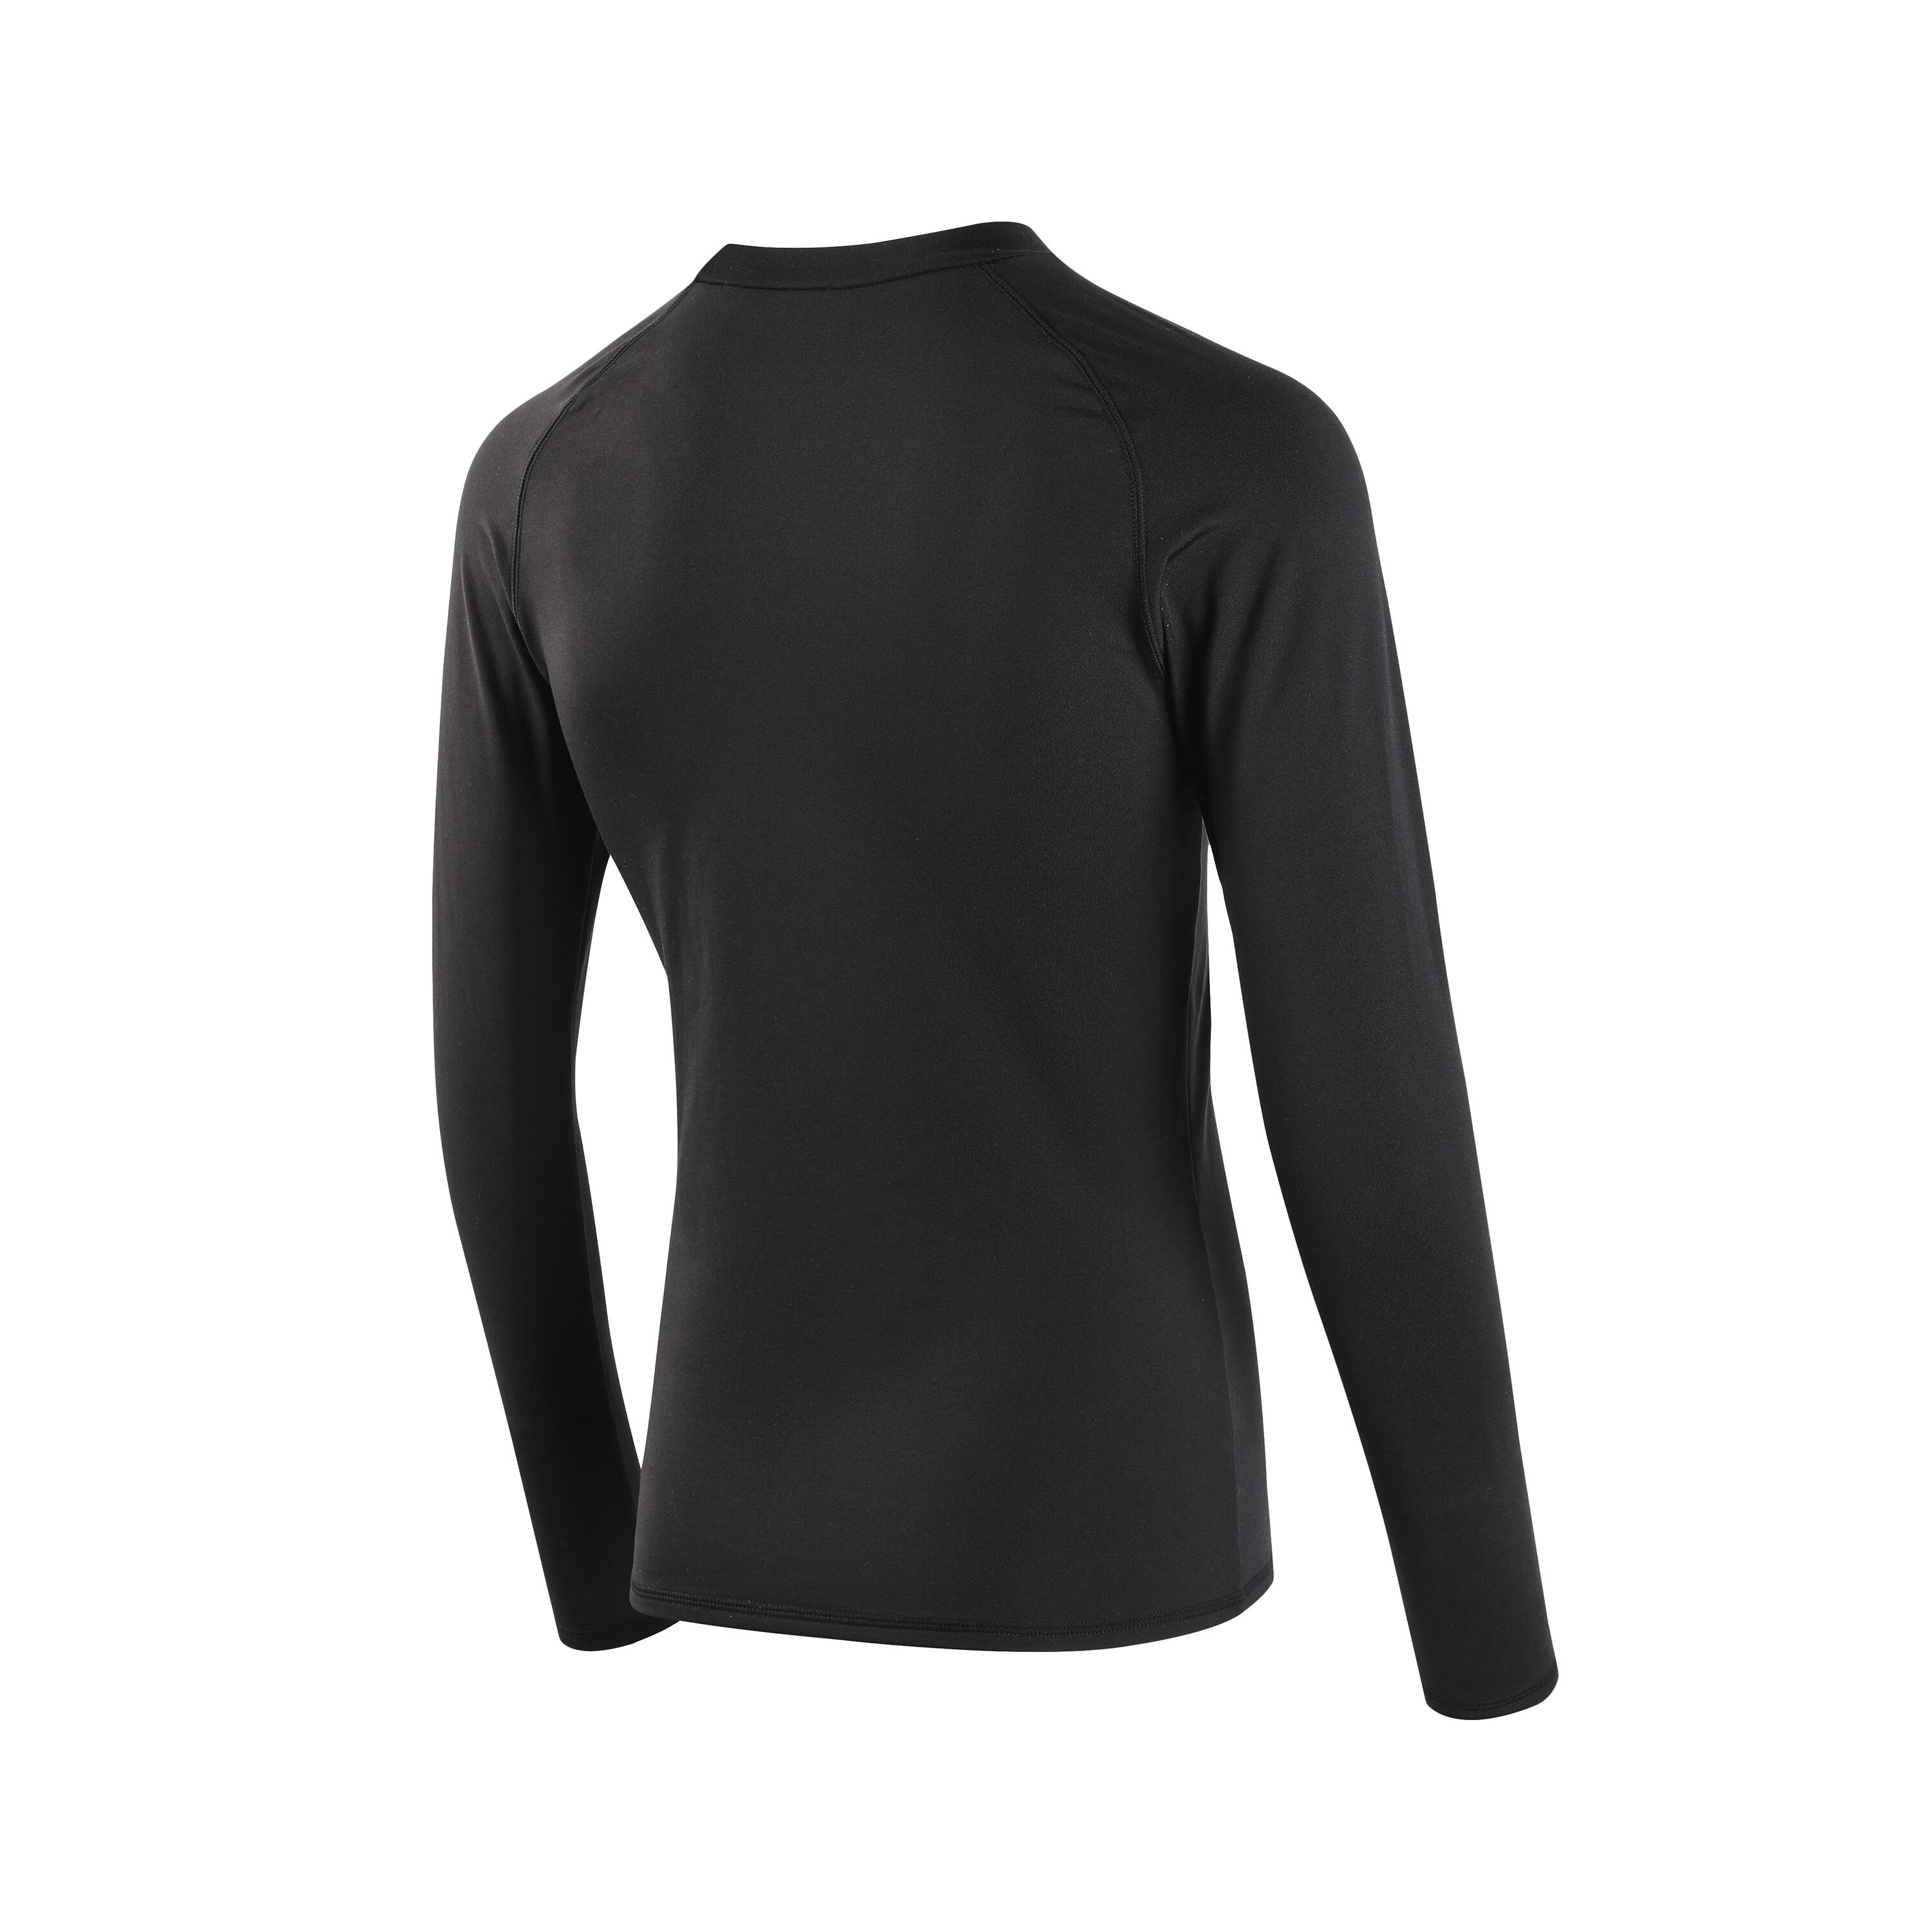 Men's Soccer Long-Sleeved Thermal Base Layer Top Keepcomfort 100 - Black - KIPSTA